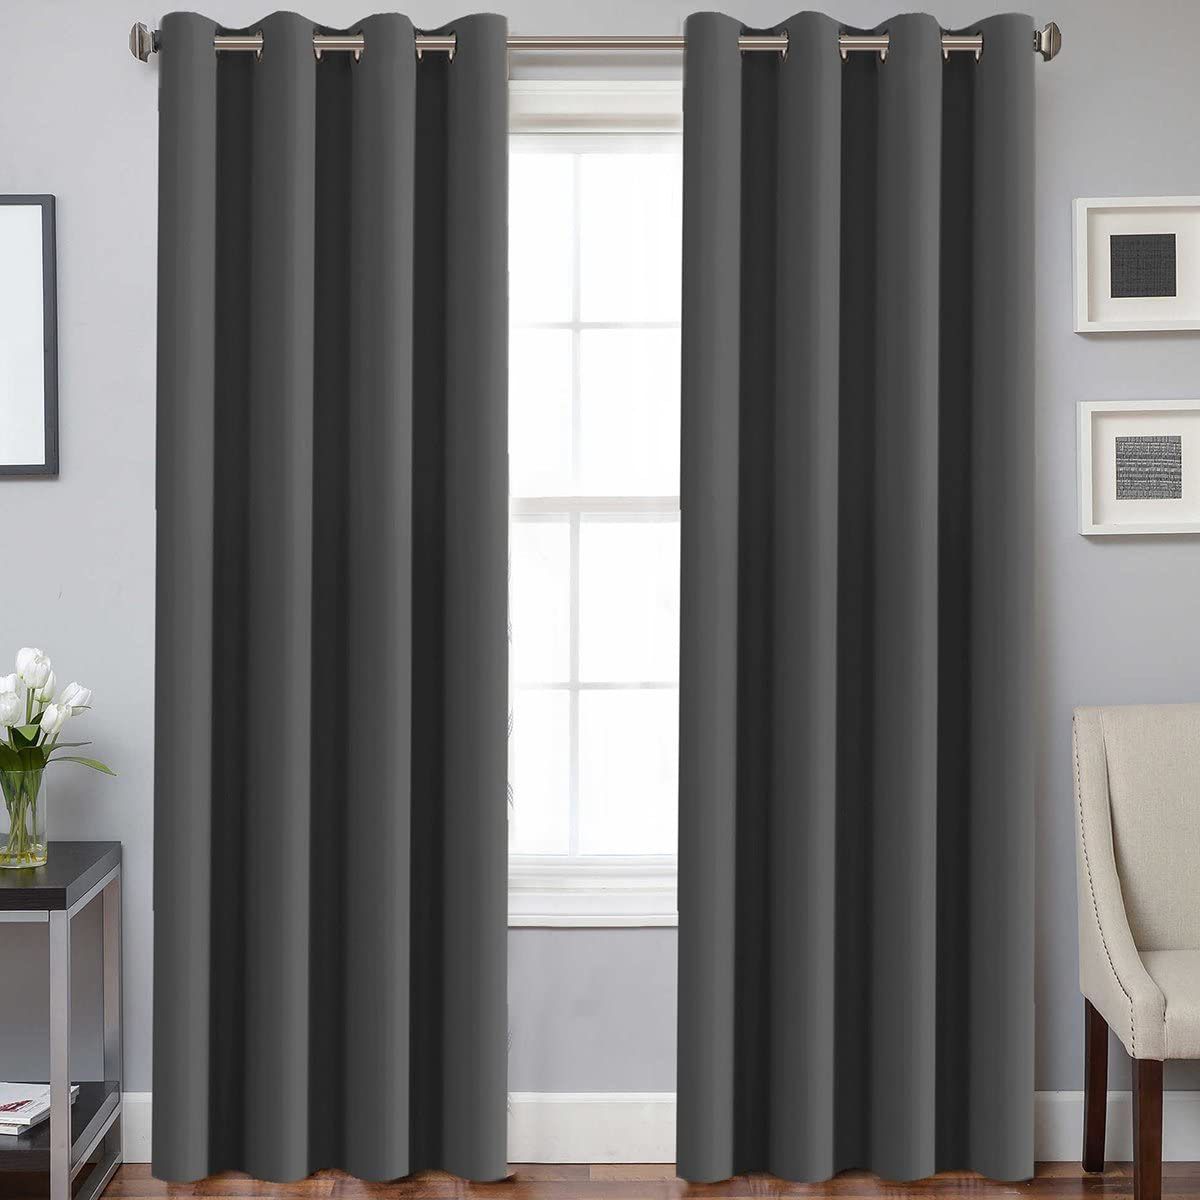 H.Versailtex Thermal Insulated Curtain